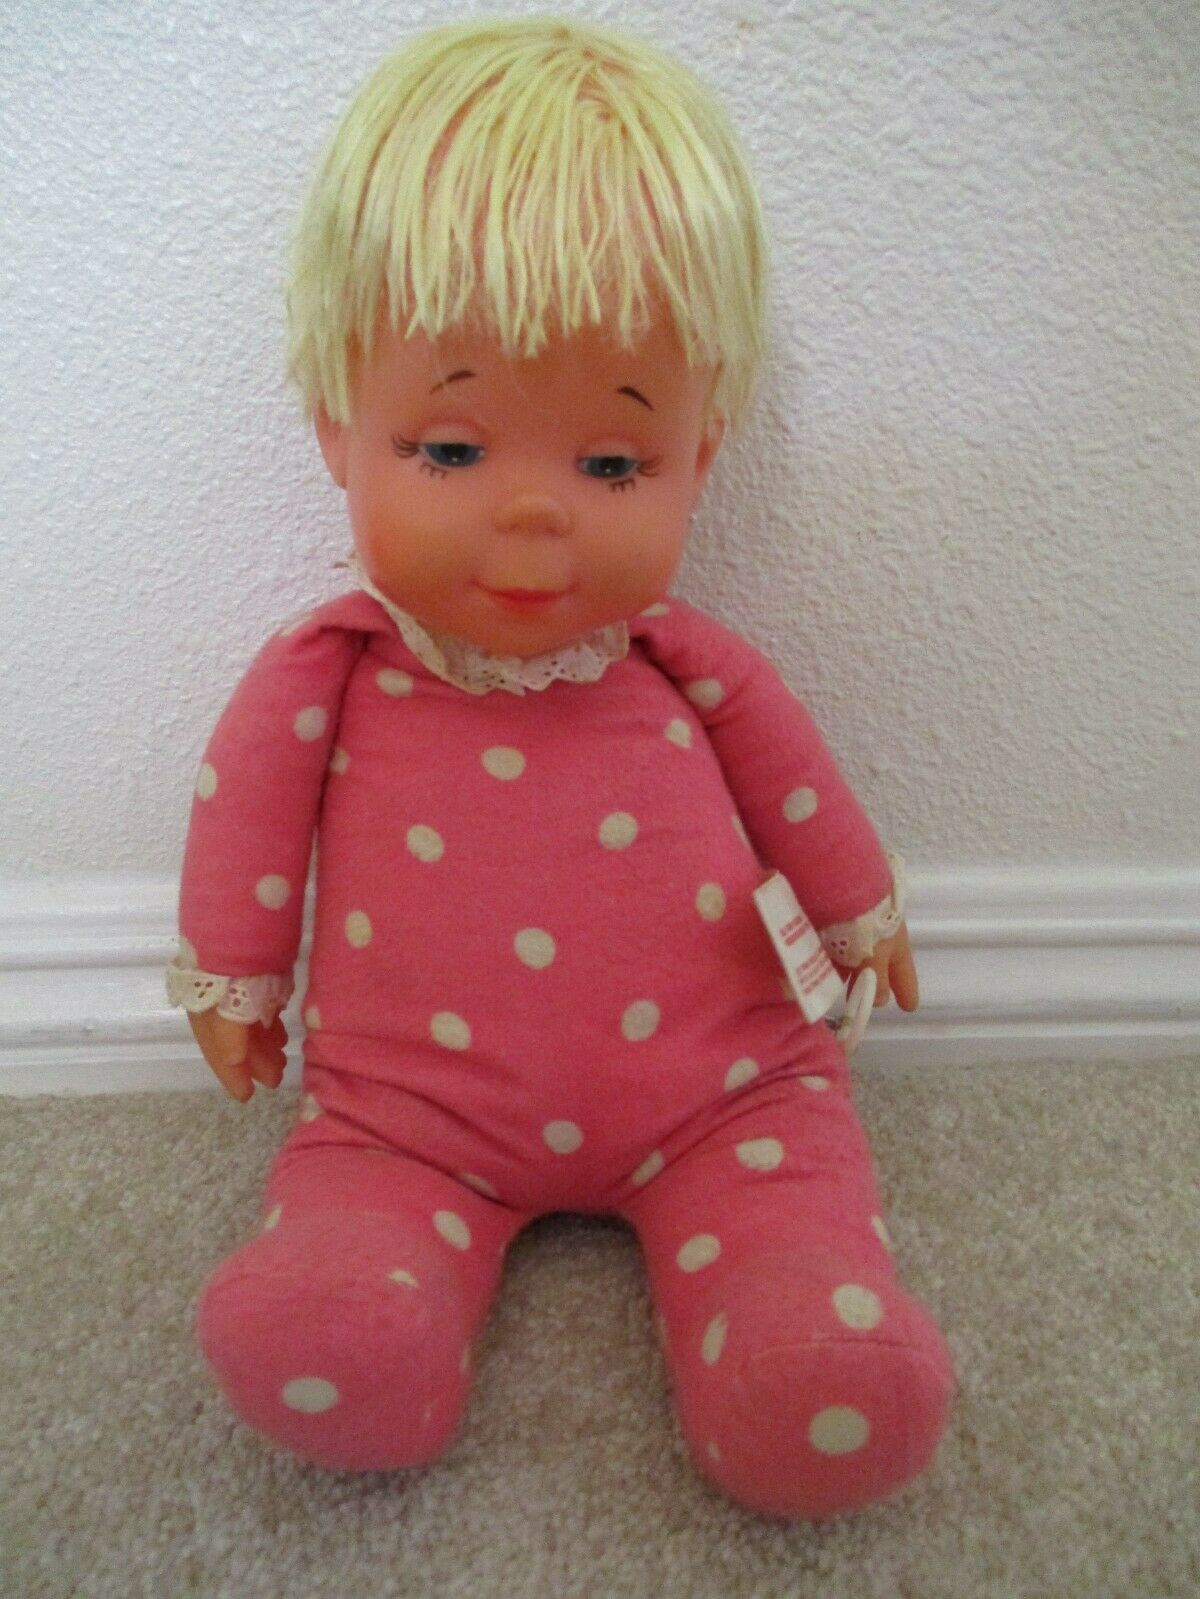 Vintage 1964 Original Mattel Drowsy Doll! Pull String, But Not Talking.